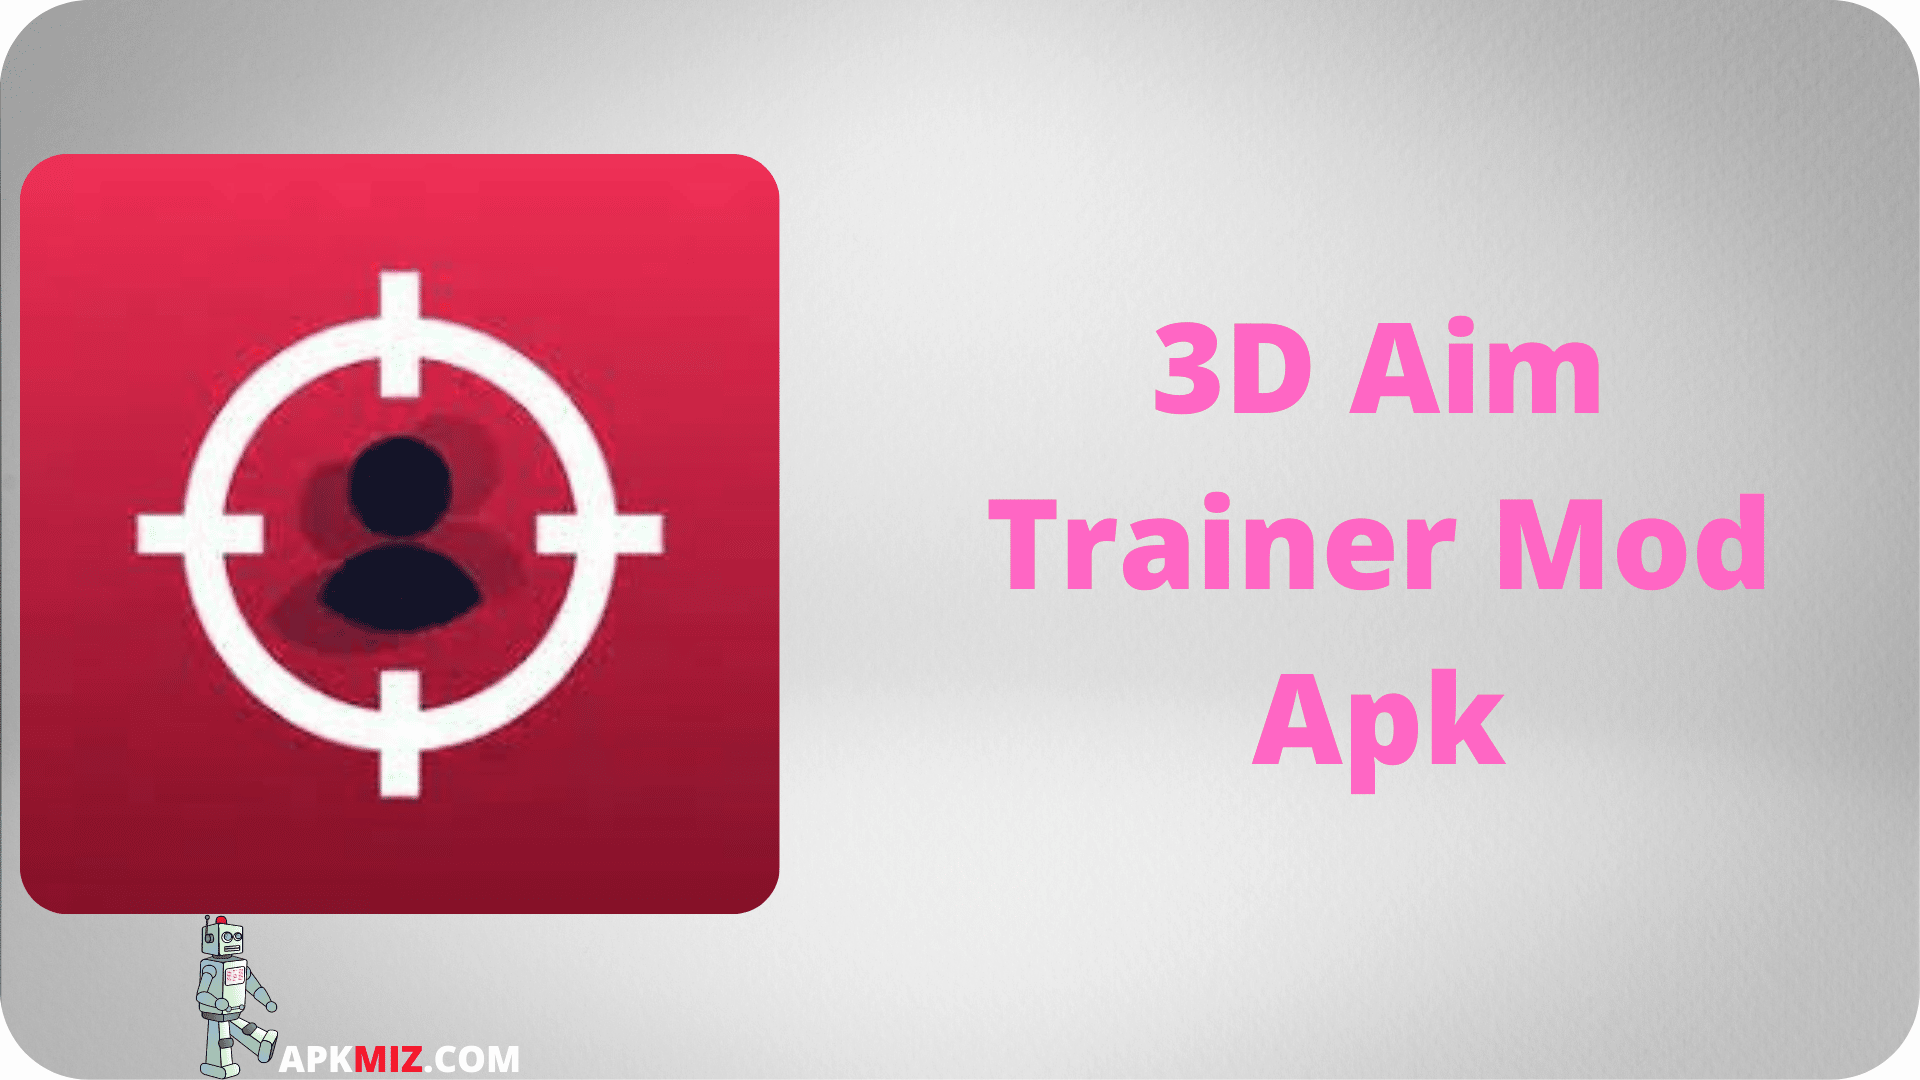 3D Aim Trainer Mod Apk